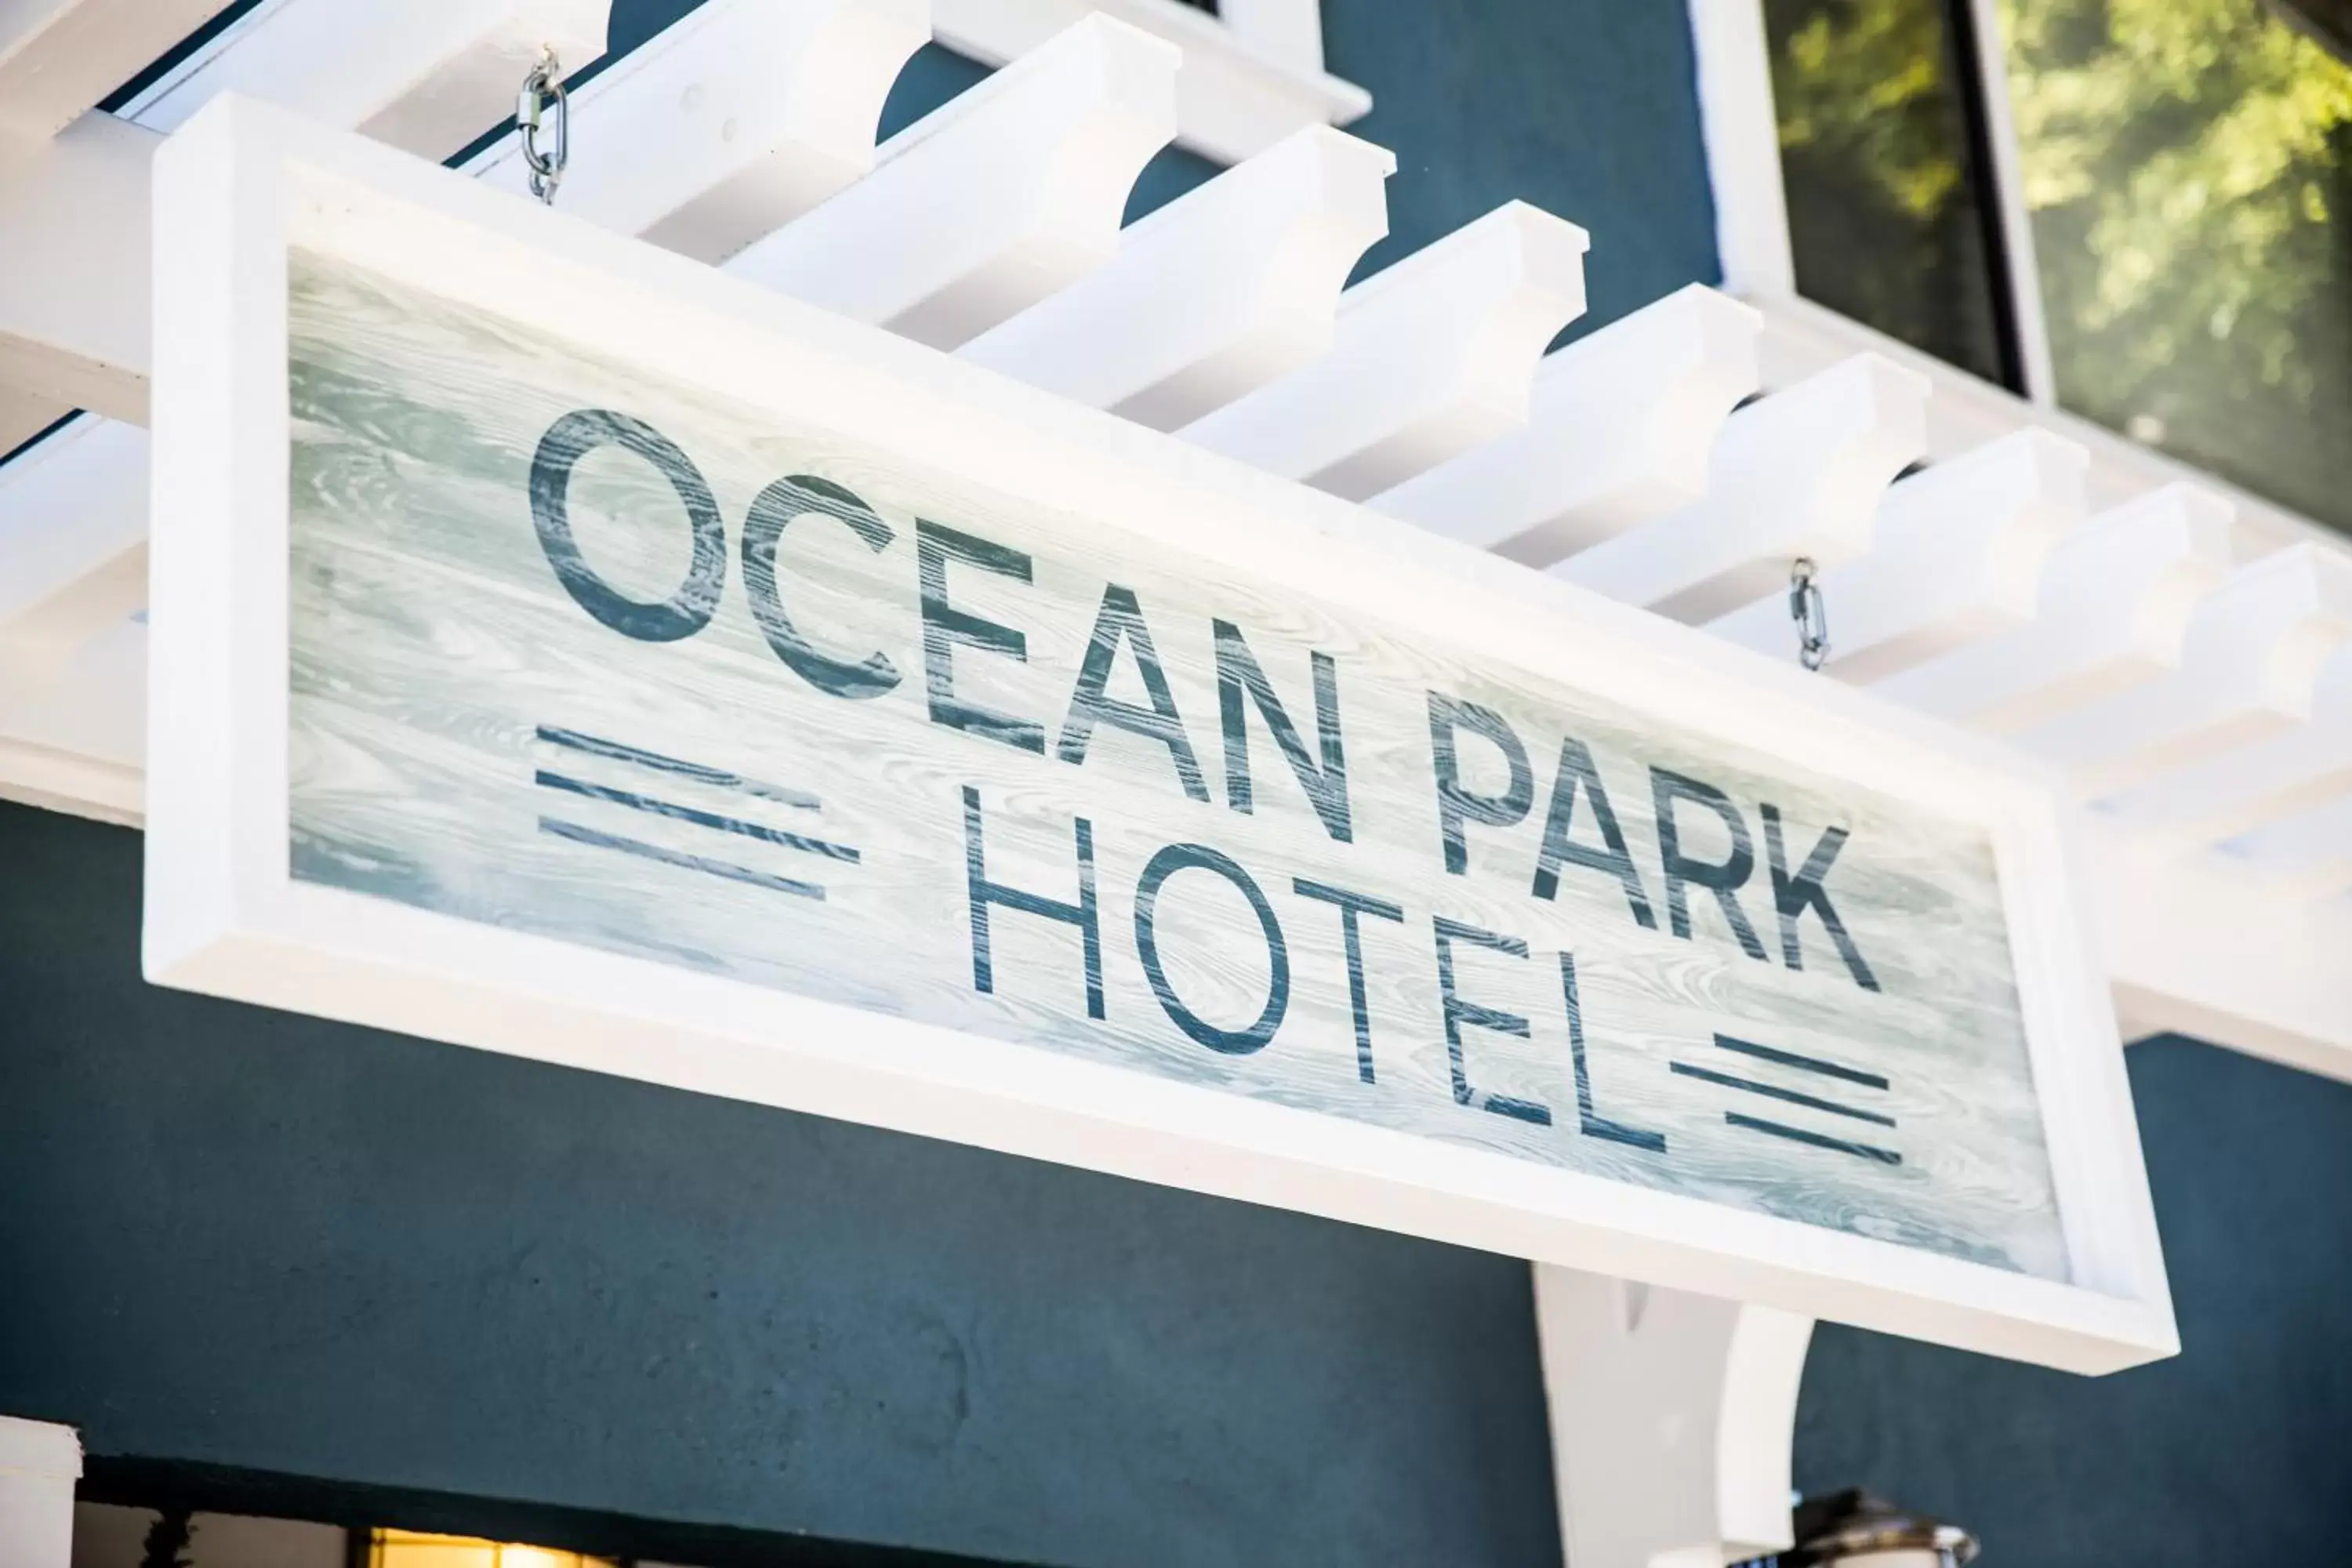 Property logo or sign in Ocean Park Hotel